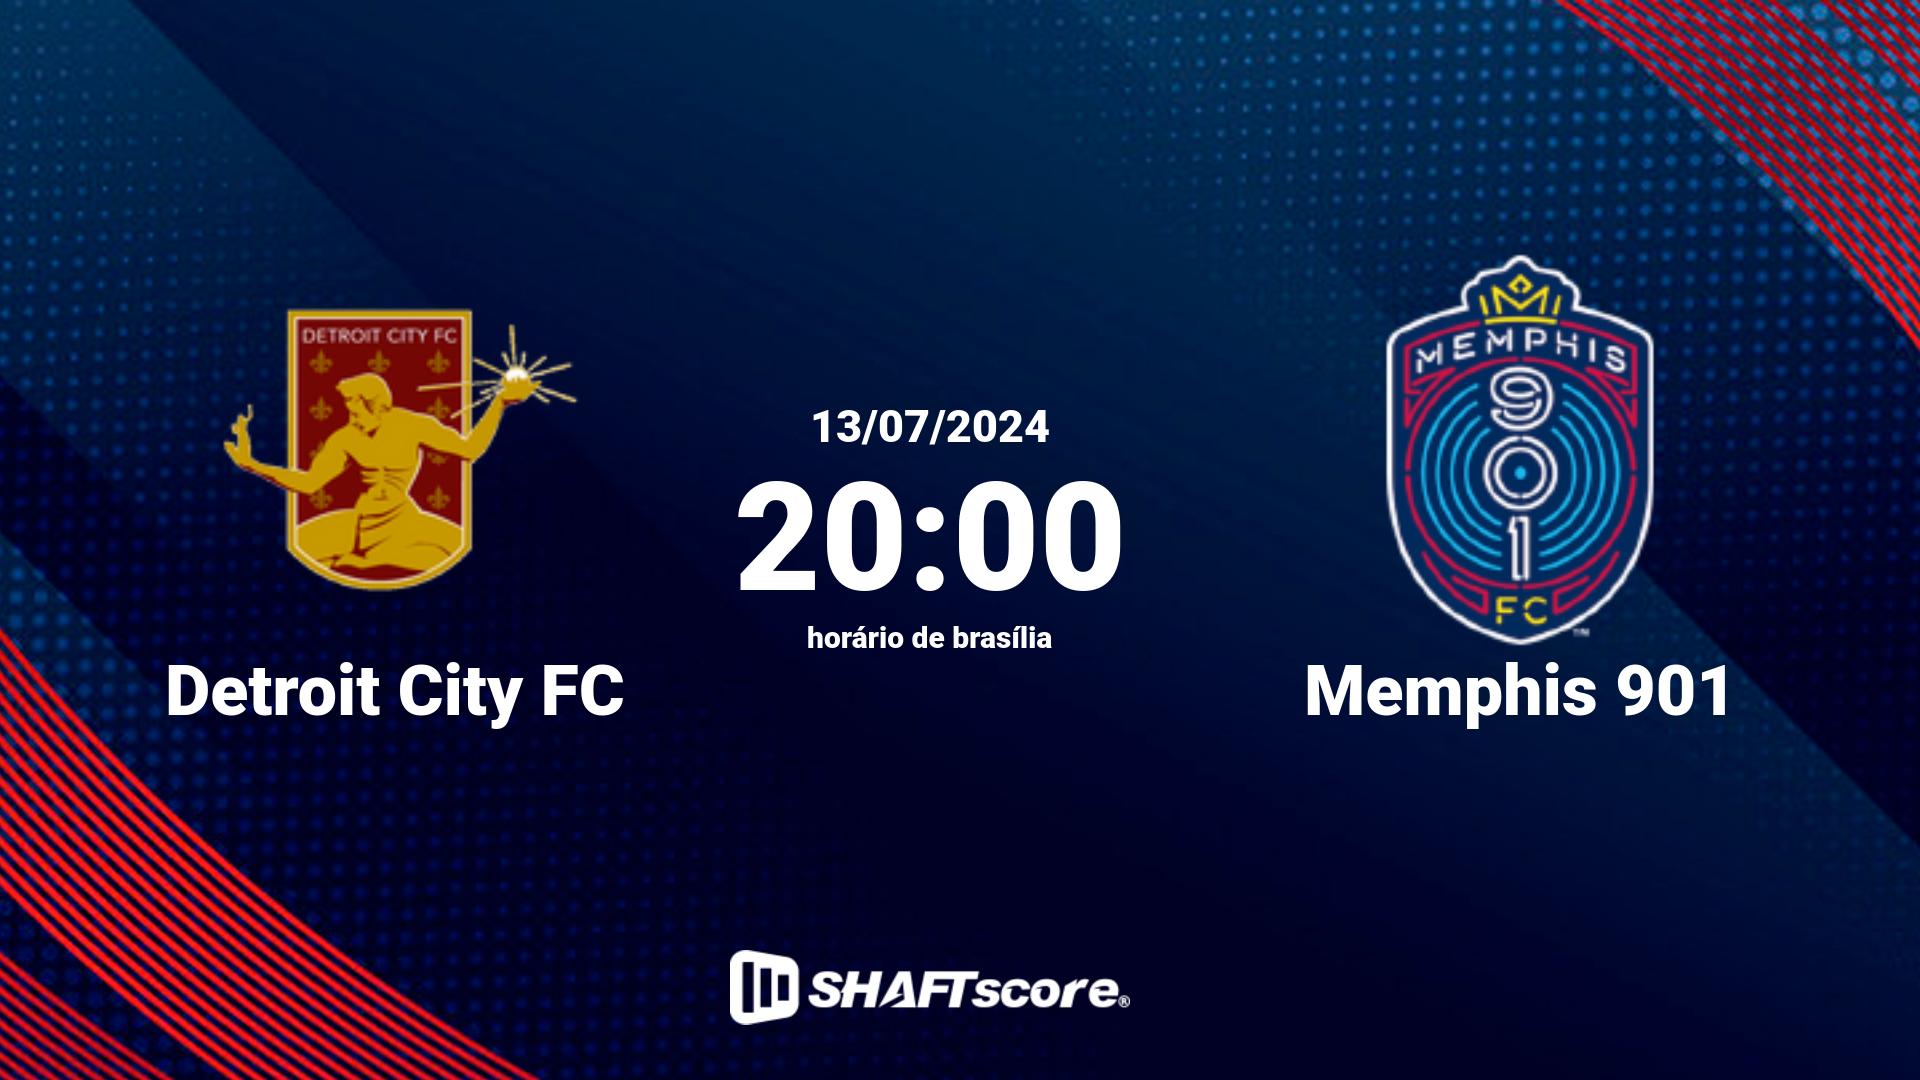 Estatísticas do jogo Detroit City FC vs Memphis 901 13.07 20:00